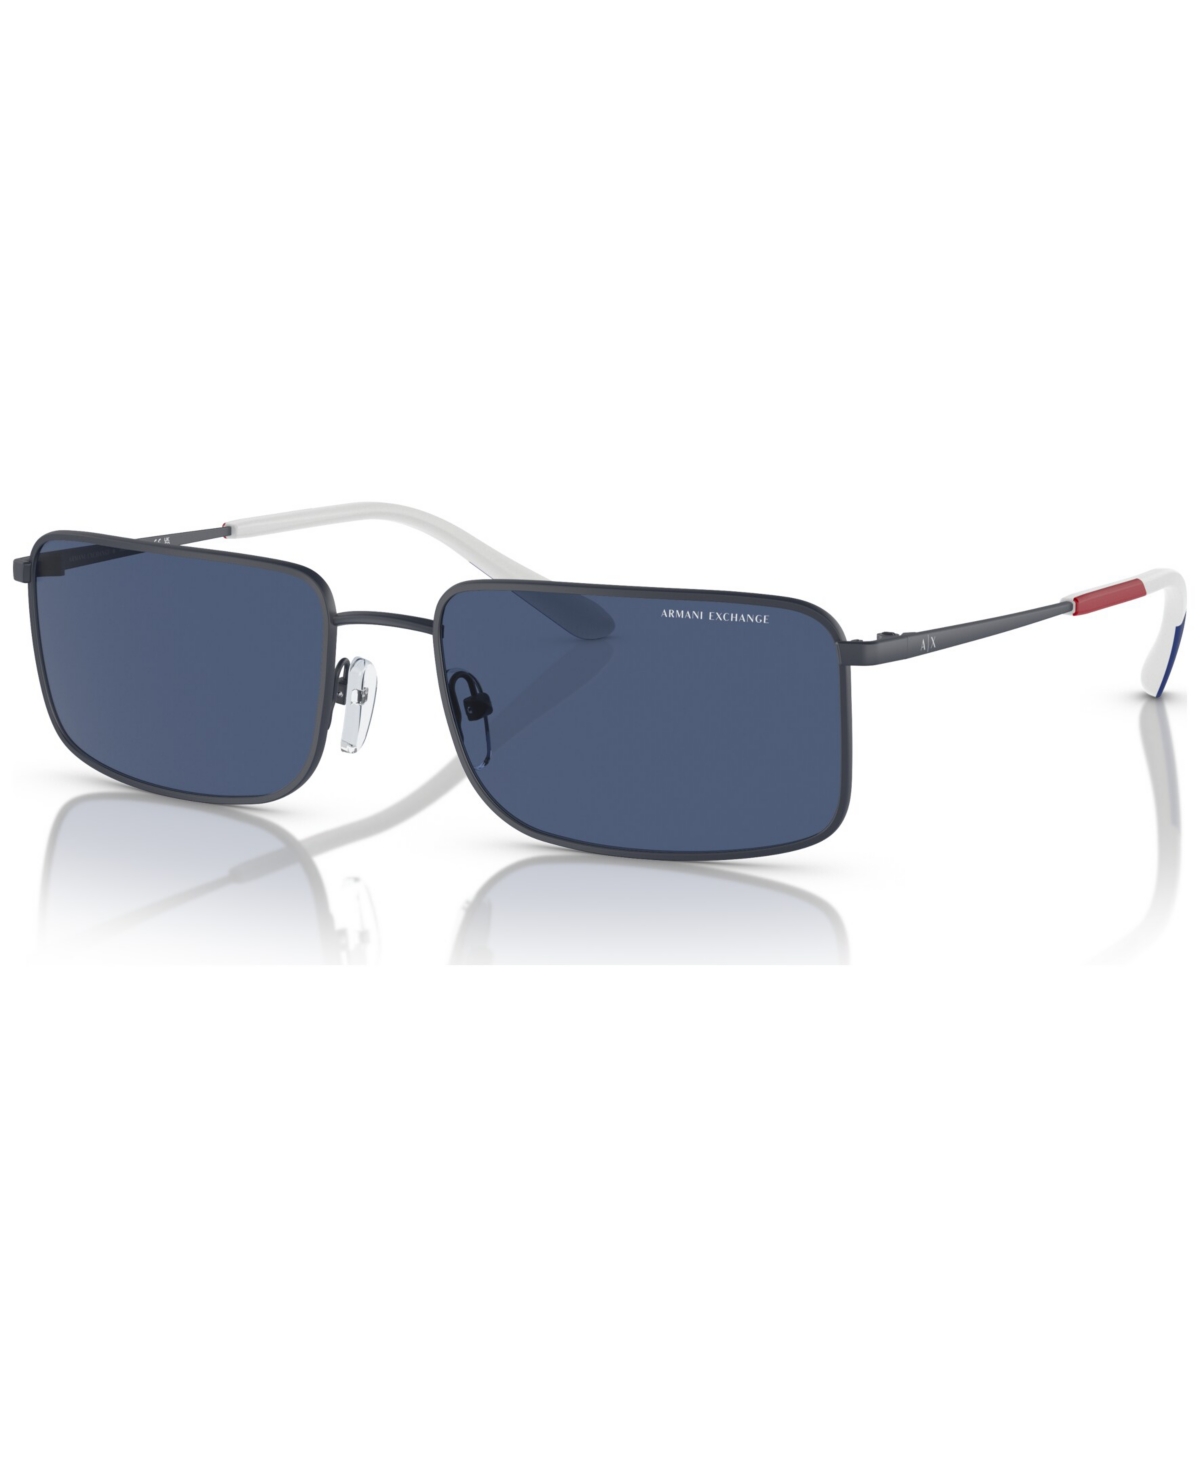 Ax Armani Exchange Men's Sunglasses, Ax2044s In Blue